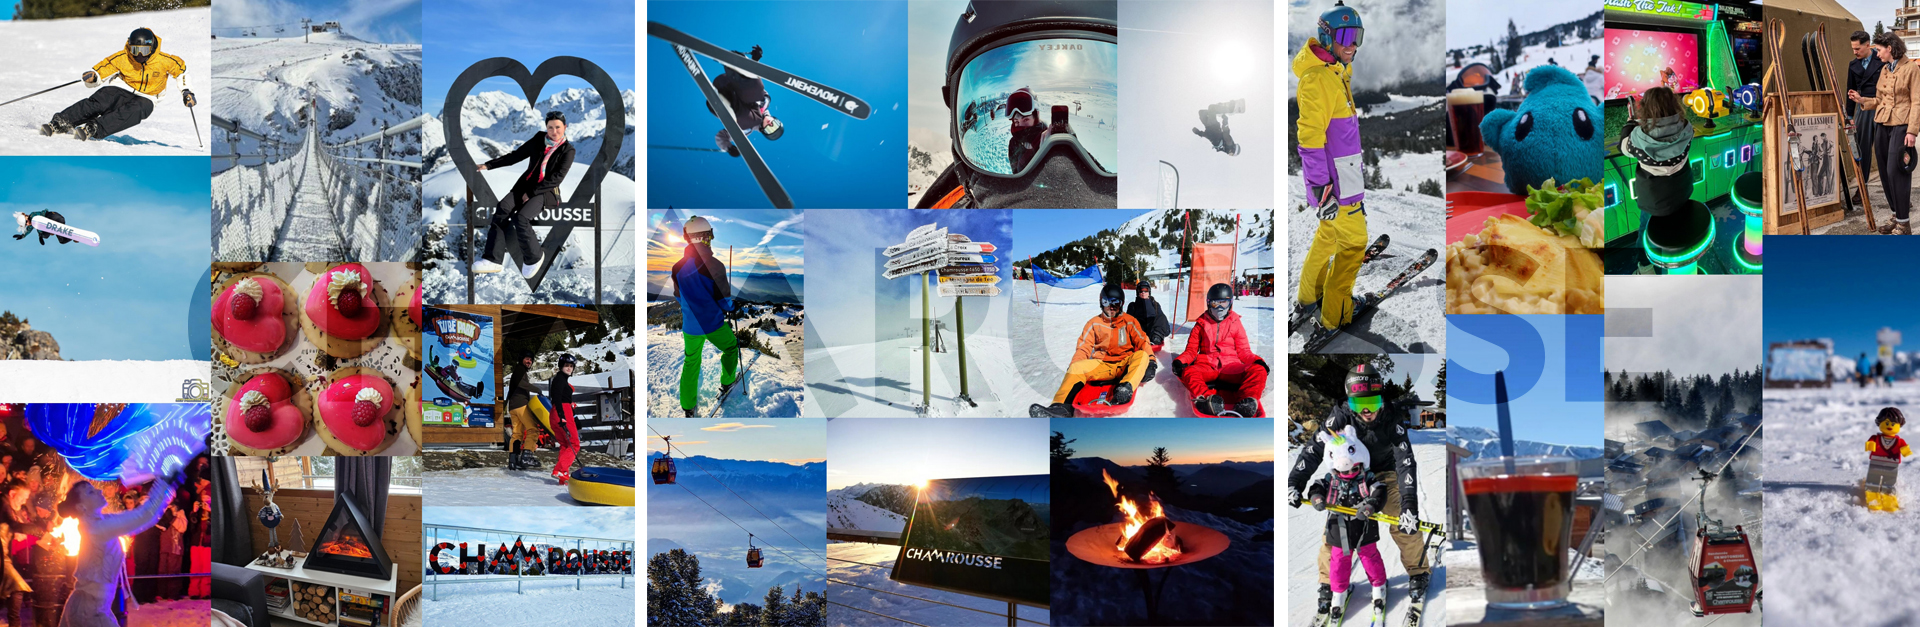 Chamrousse montage photo instagram memories facebook hiver 2022-2023 station ski montagne grenoble isère alpes france - © DR